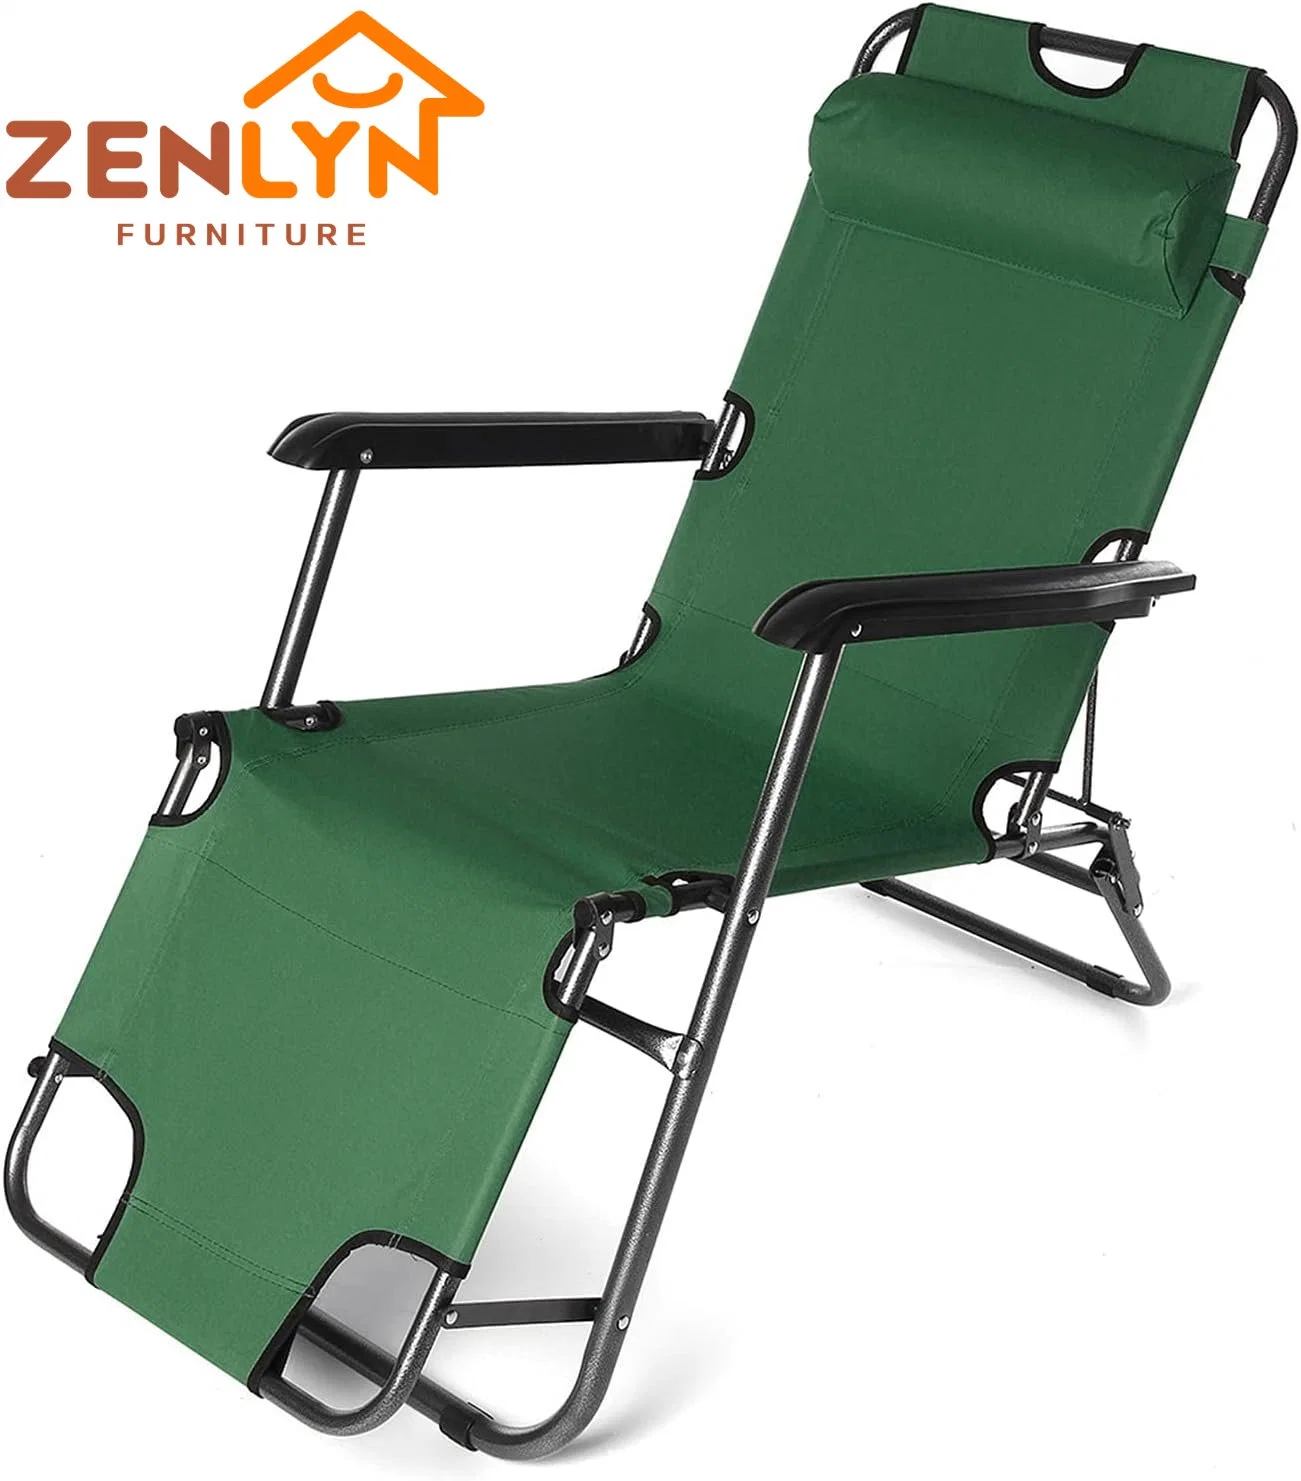 Oxford Fabric Leisure bronceado ajustable exterior plegable Camping Patio Lounge Silla playa sillón reclinable Color verde